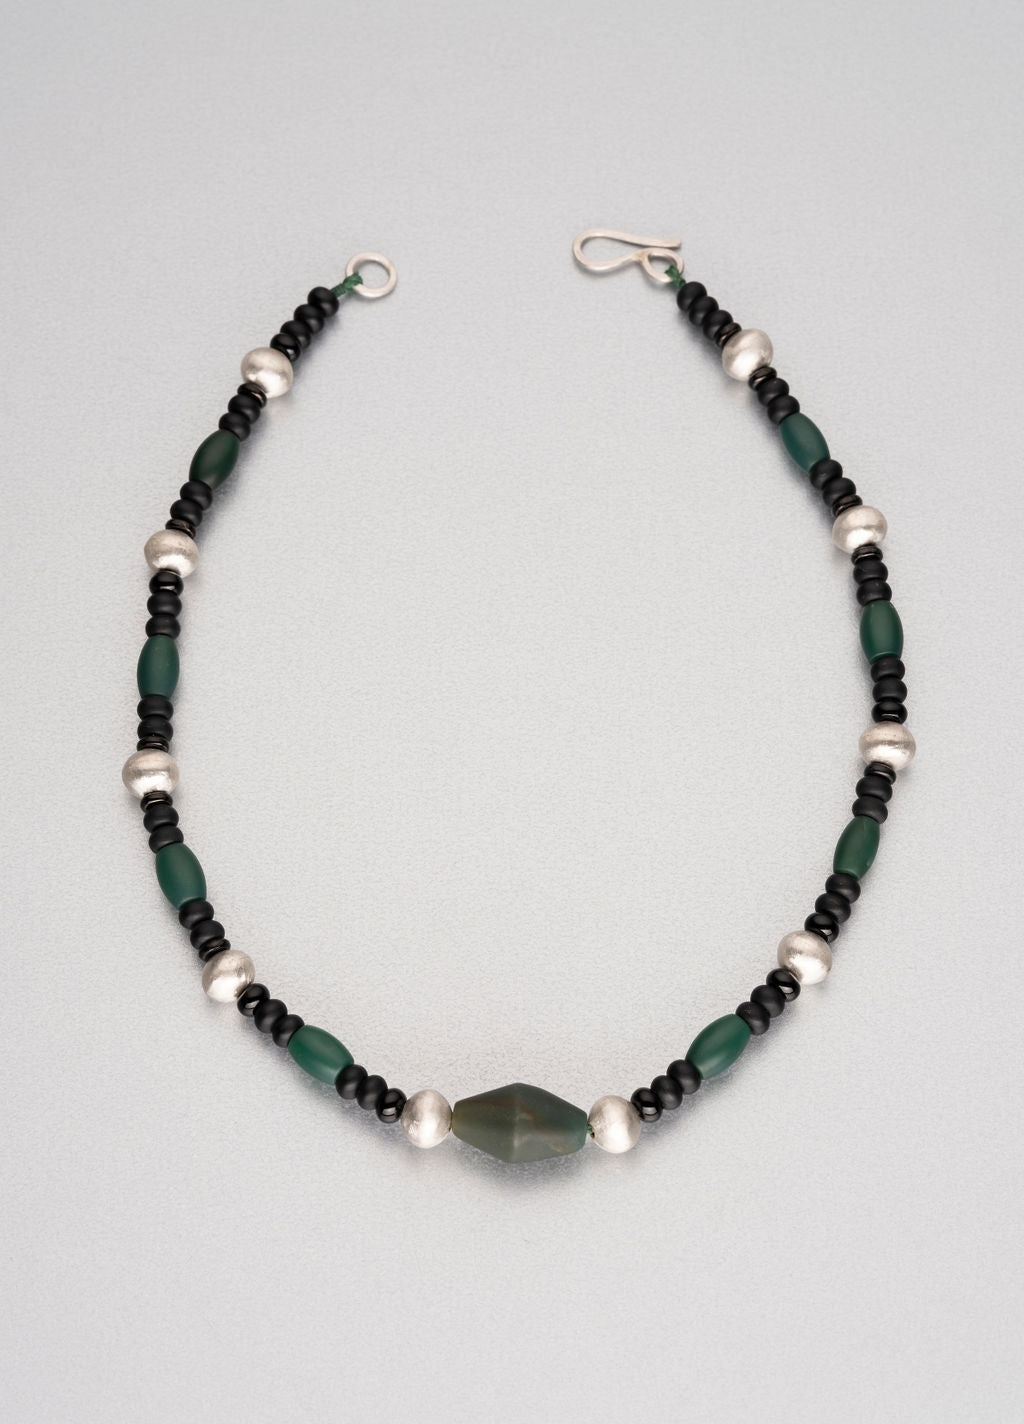 Assorted semi-precious stones and silver necklace.